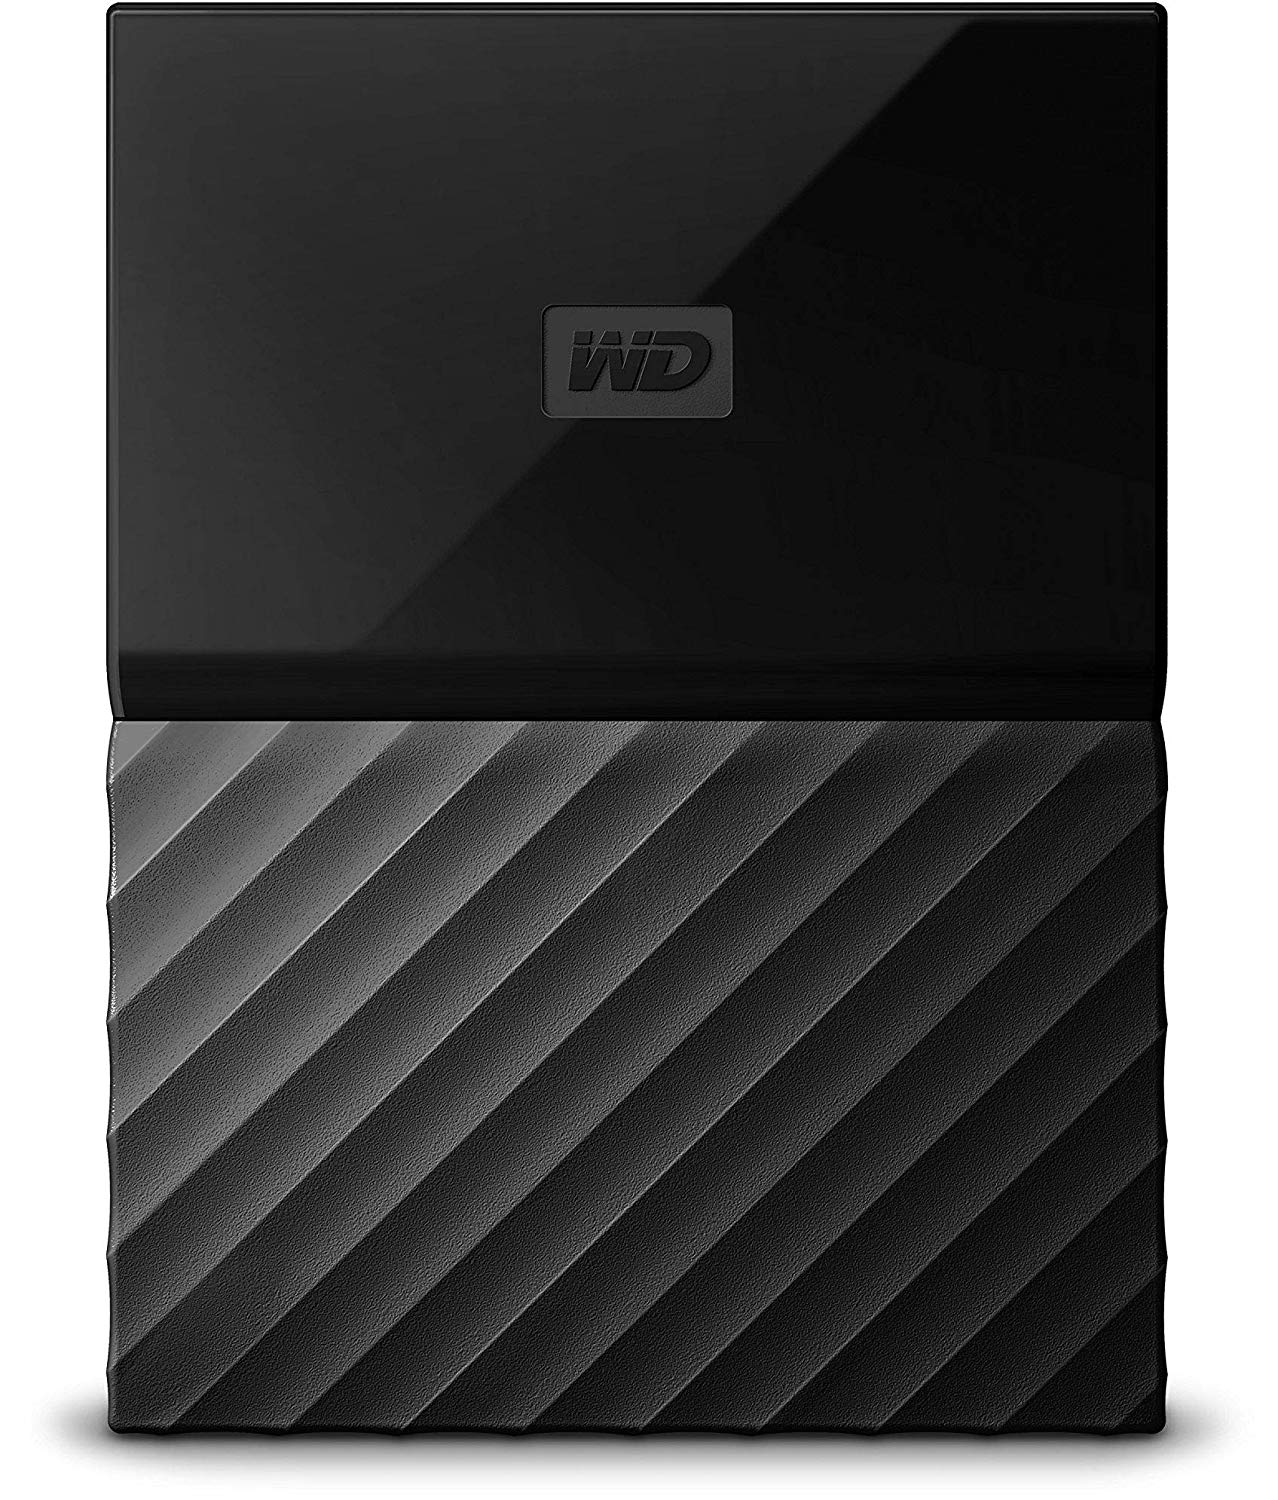 Disco duro externo WD de 4 TB